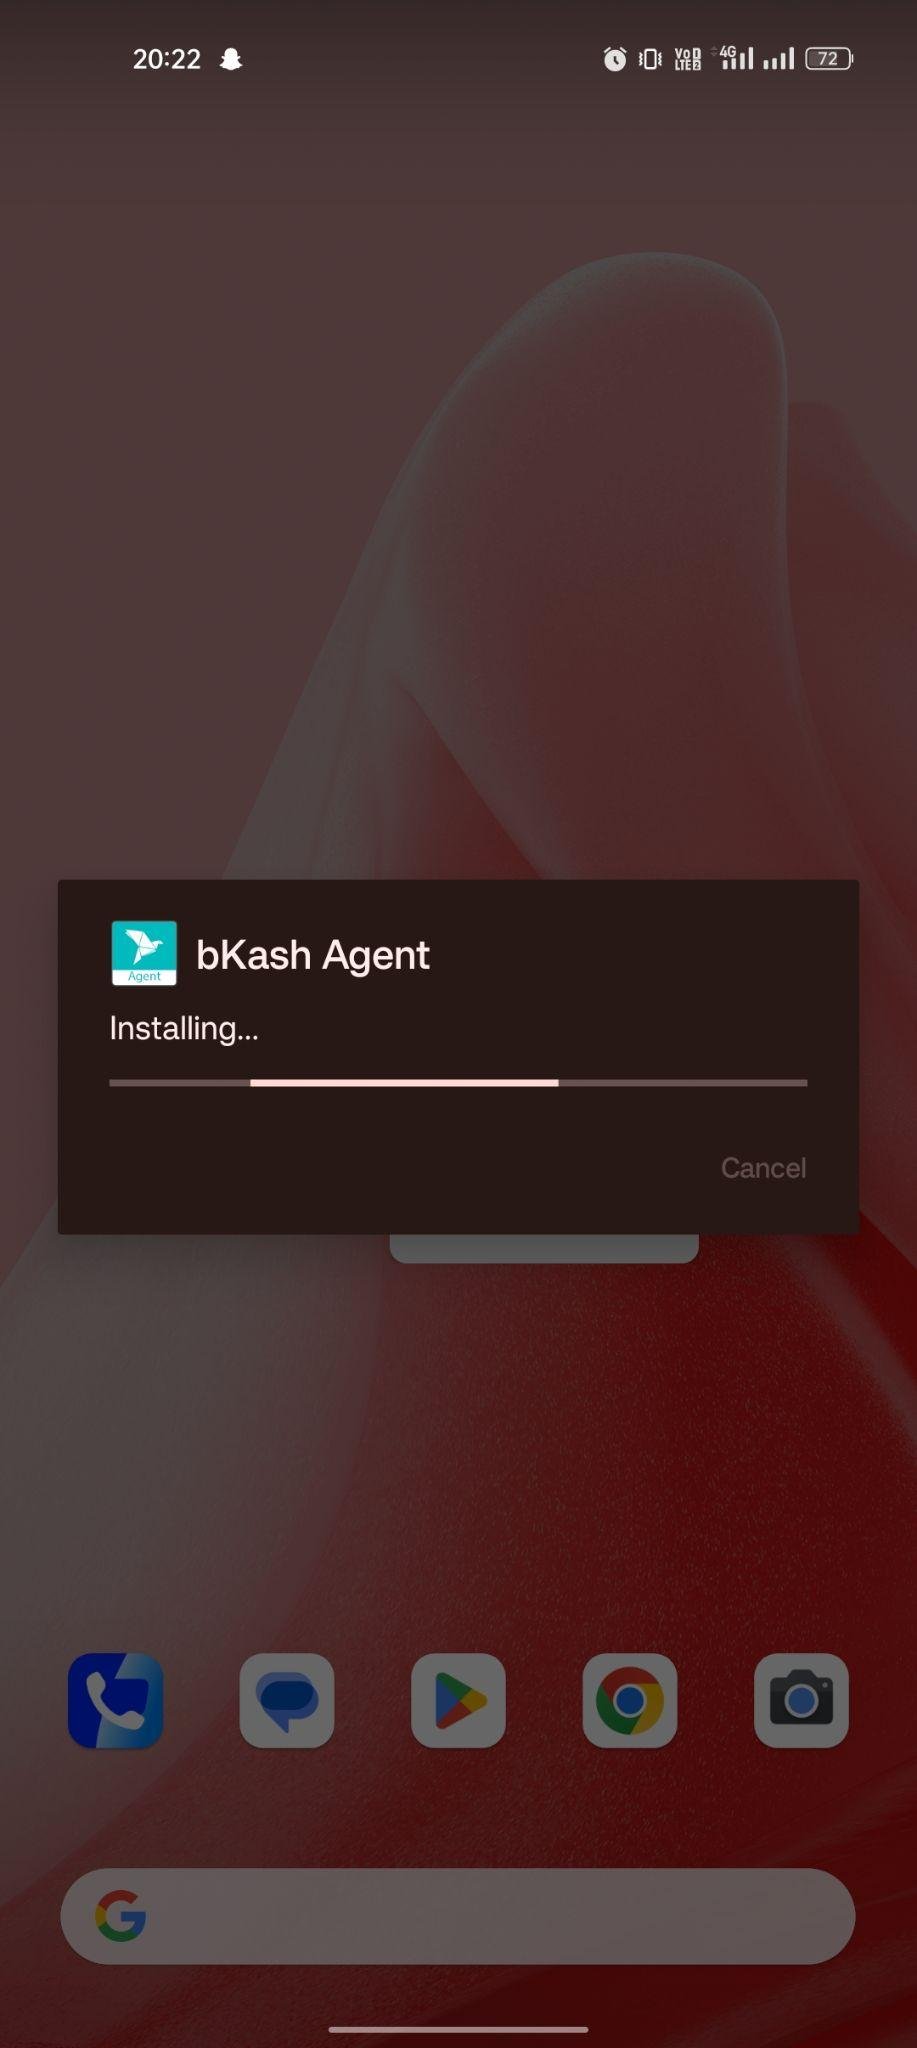 bKash Agent apk installing